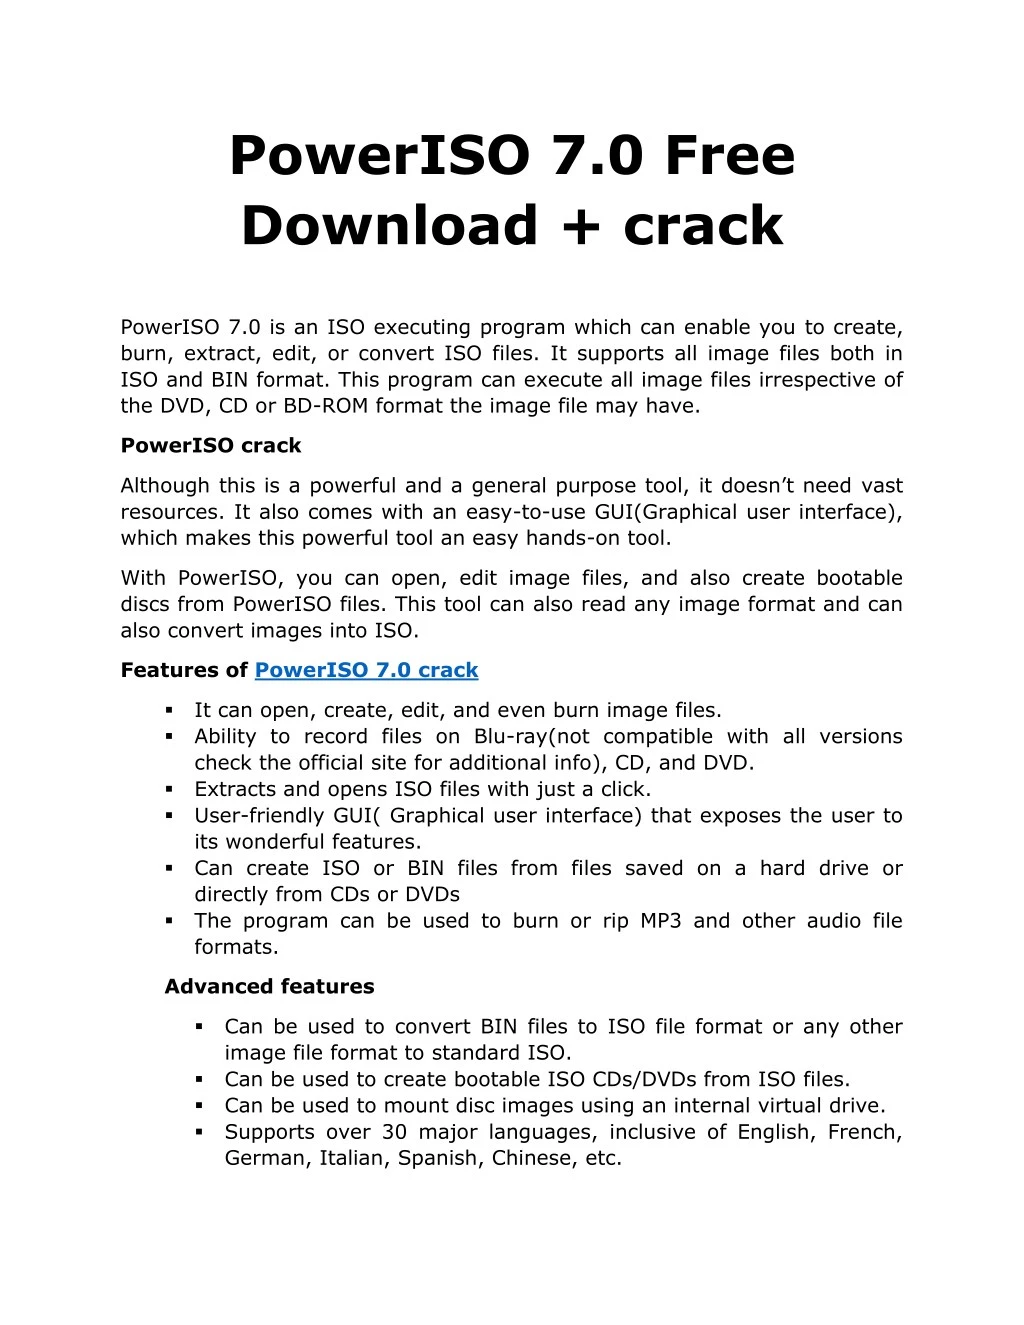 poweriso 7 0 free download crack